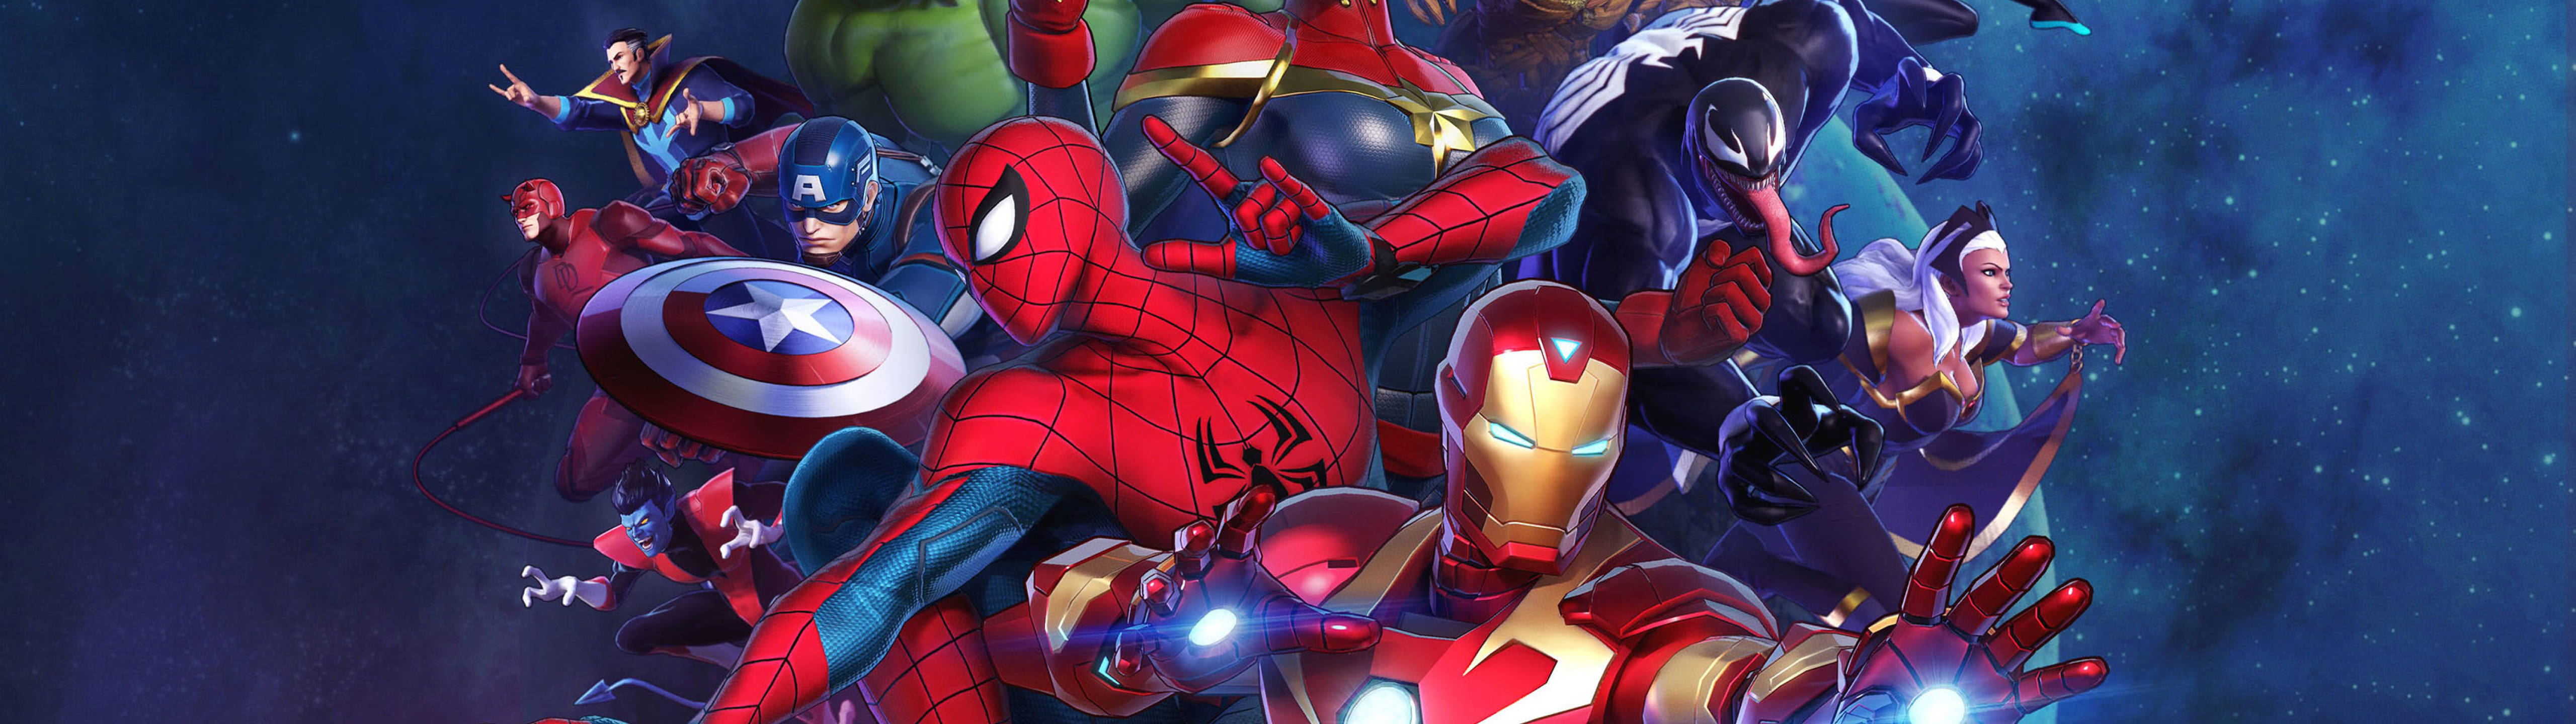 Marvel Heroes Animated 5120 X 1440 Background